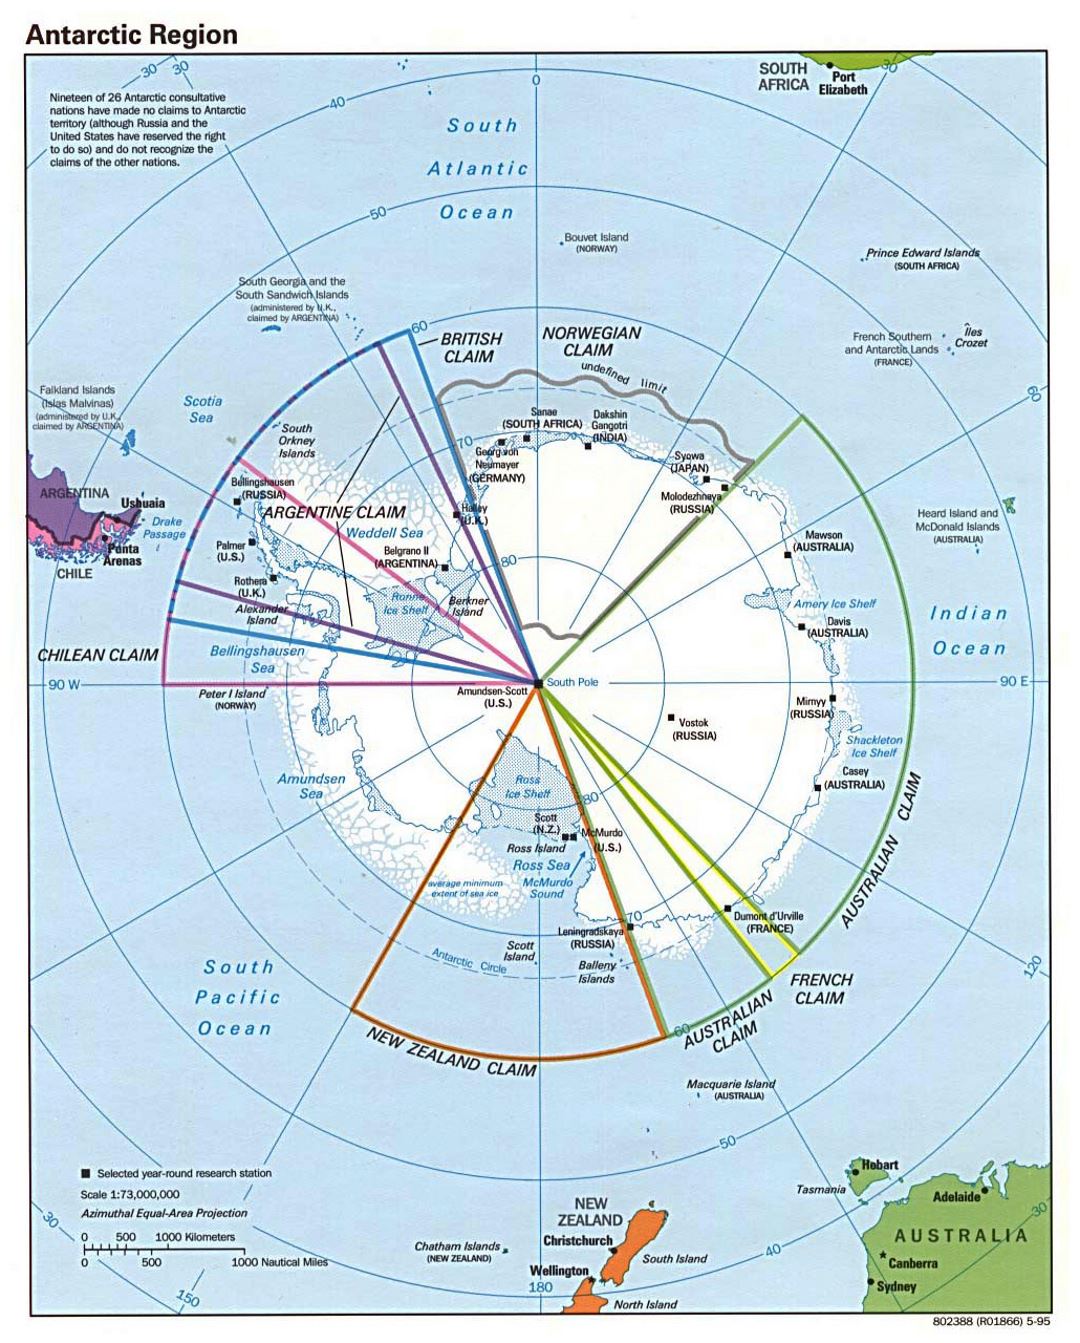 Large Antarctic Region political map - 1995